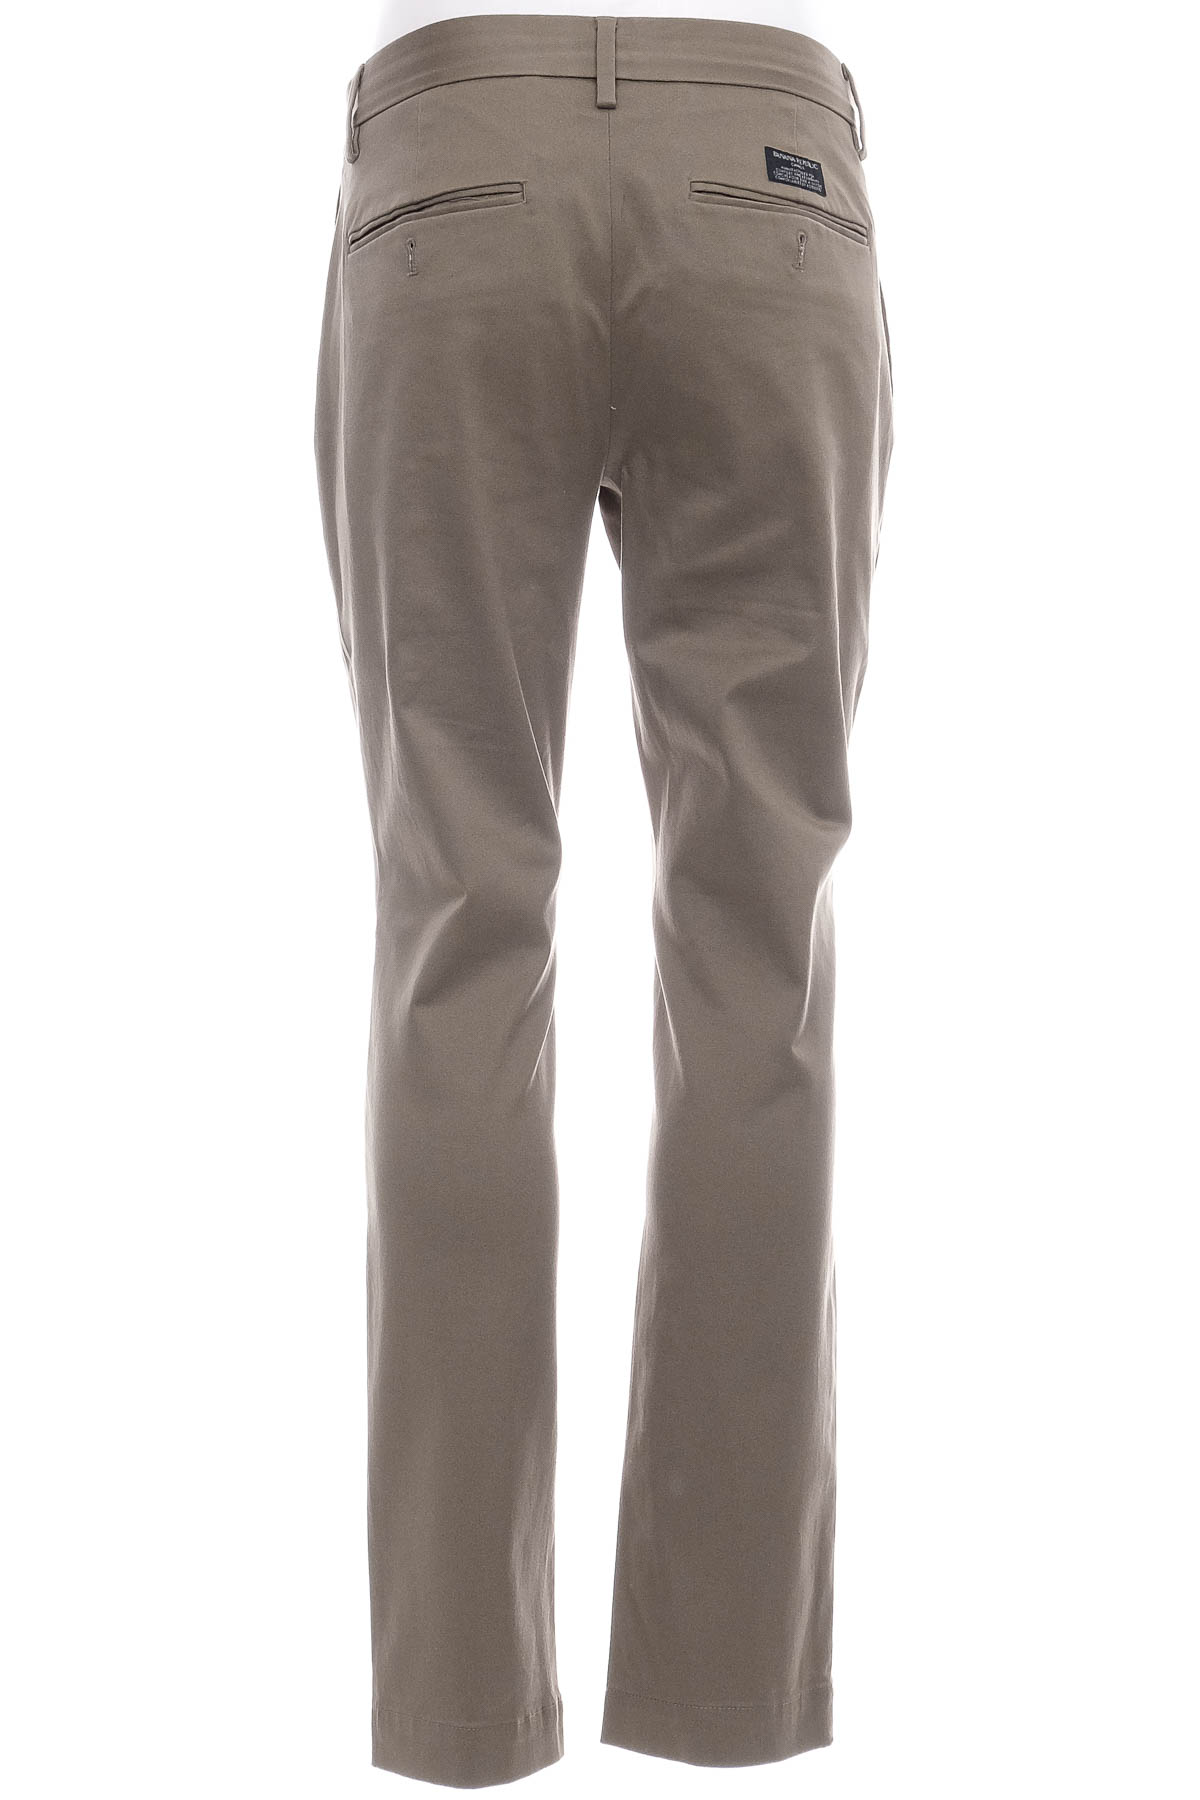 Men's trousers - BANANA REPUBLIC - 1